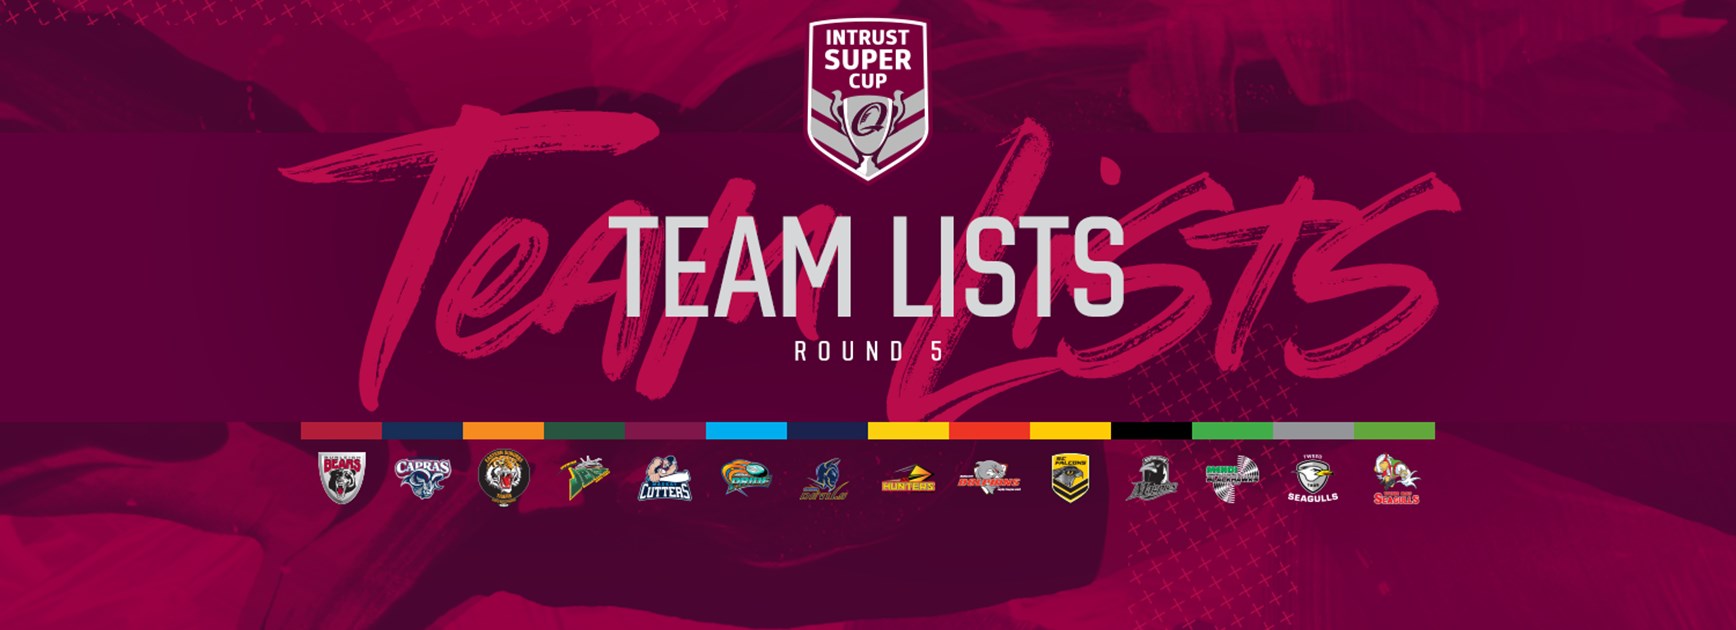 Round 5 Intrust Super Cup Red Socks Round team lists